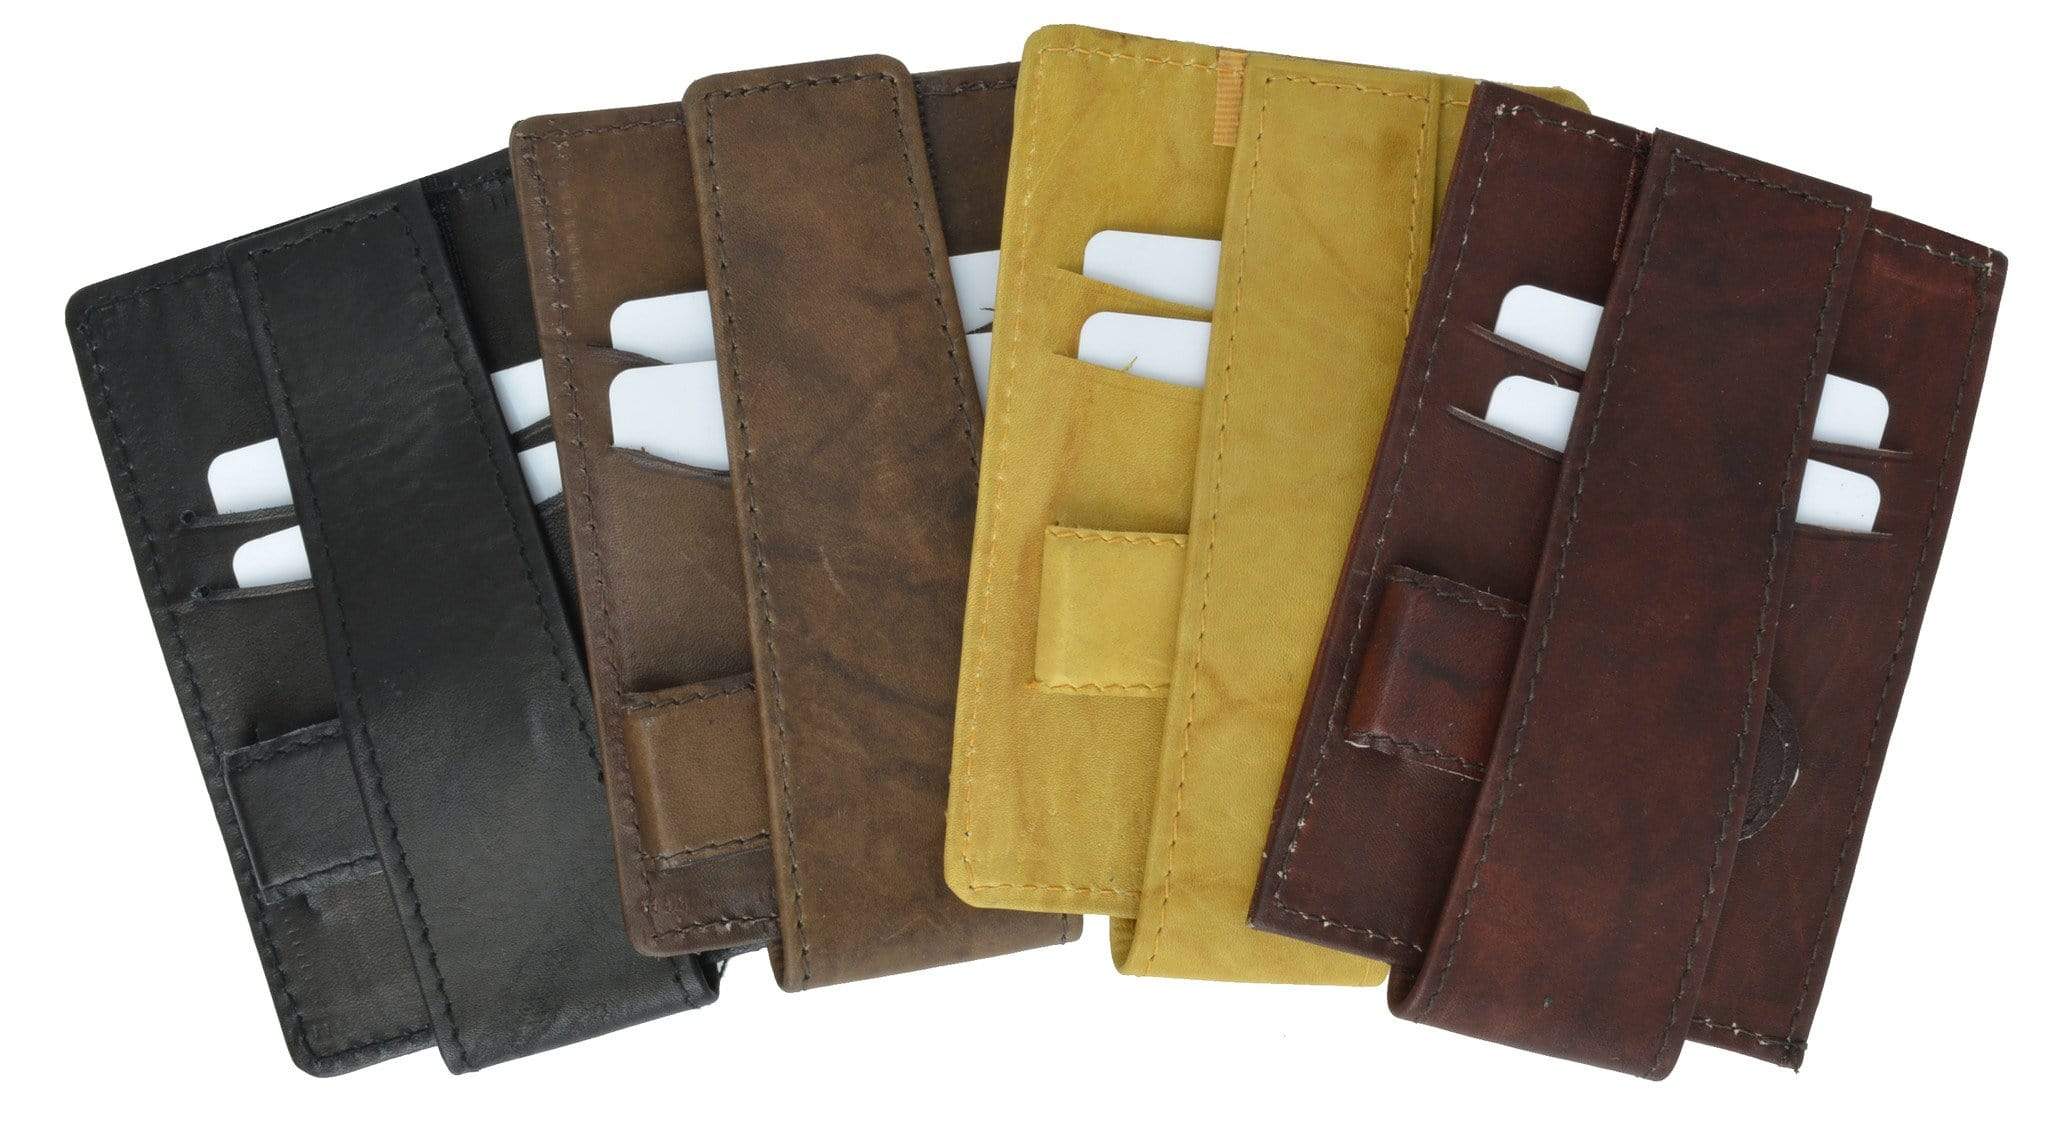 Al Fascino Brown wallet Purse for Men Leather mens Wallets for Men purses  for men Genuine rfid wallet Mens Wallet genuine leather wallet mens wallets  bifold leather wallet men : Amazon.in: Bags,